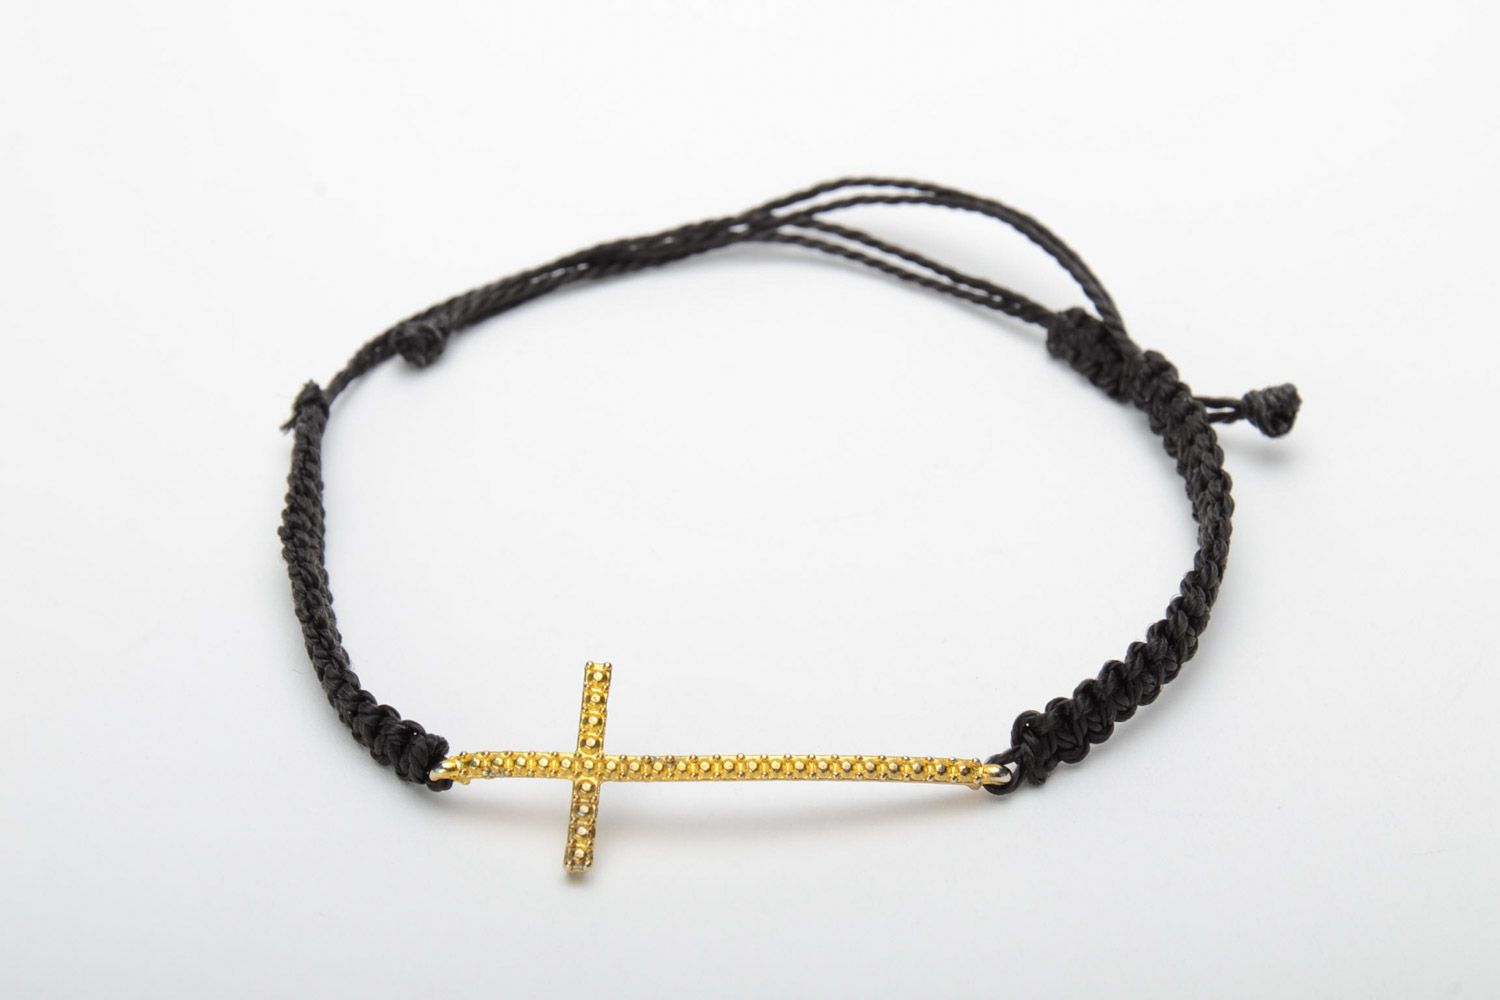 Handmade friendship wrist bracelet woven of caprone threads with metal cross charm photo 5